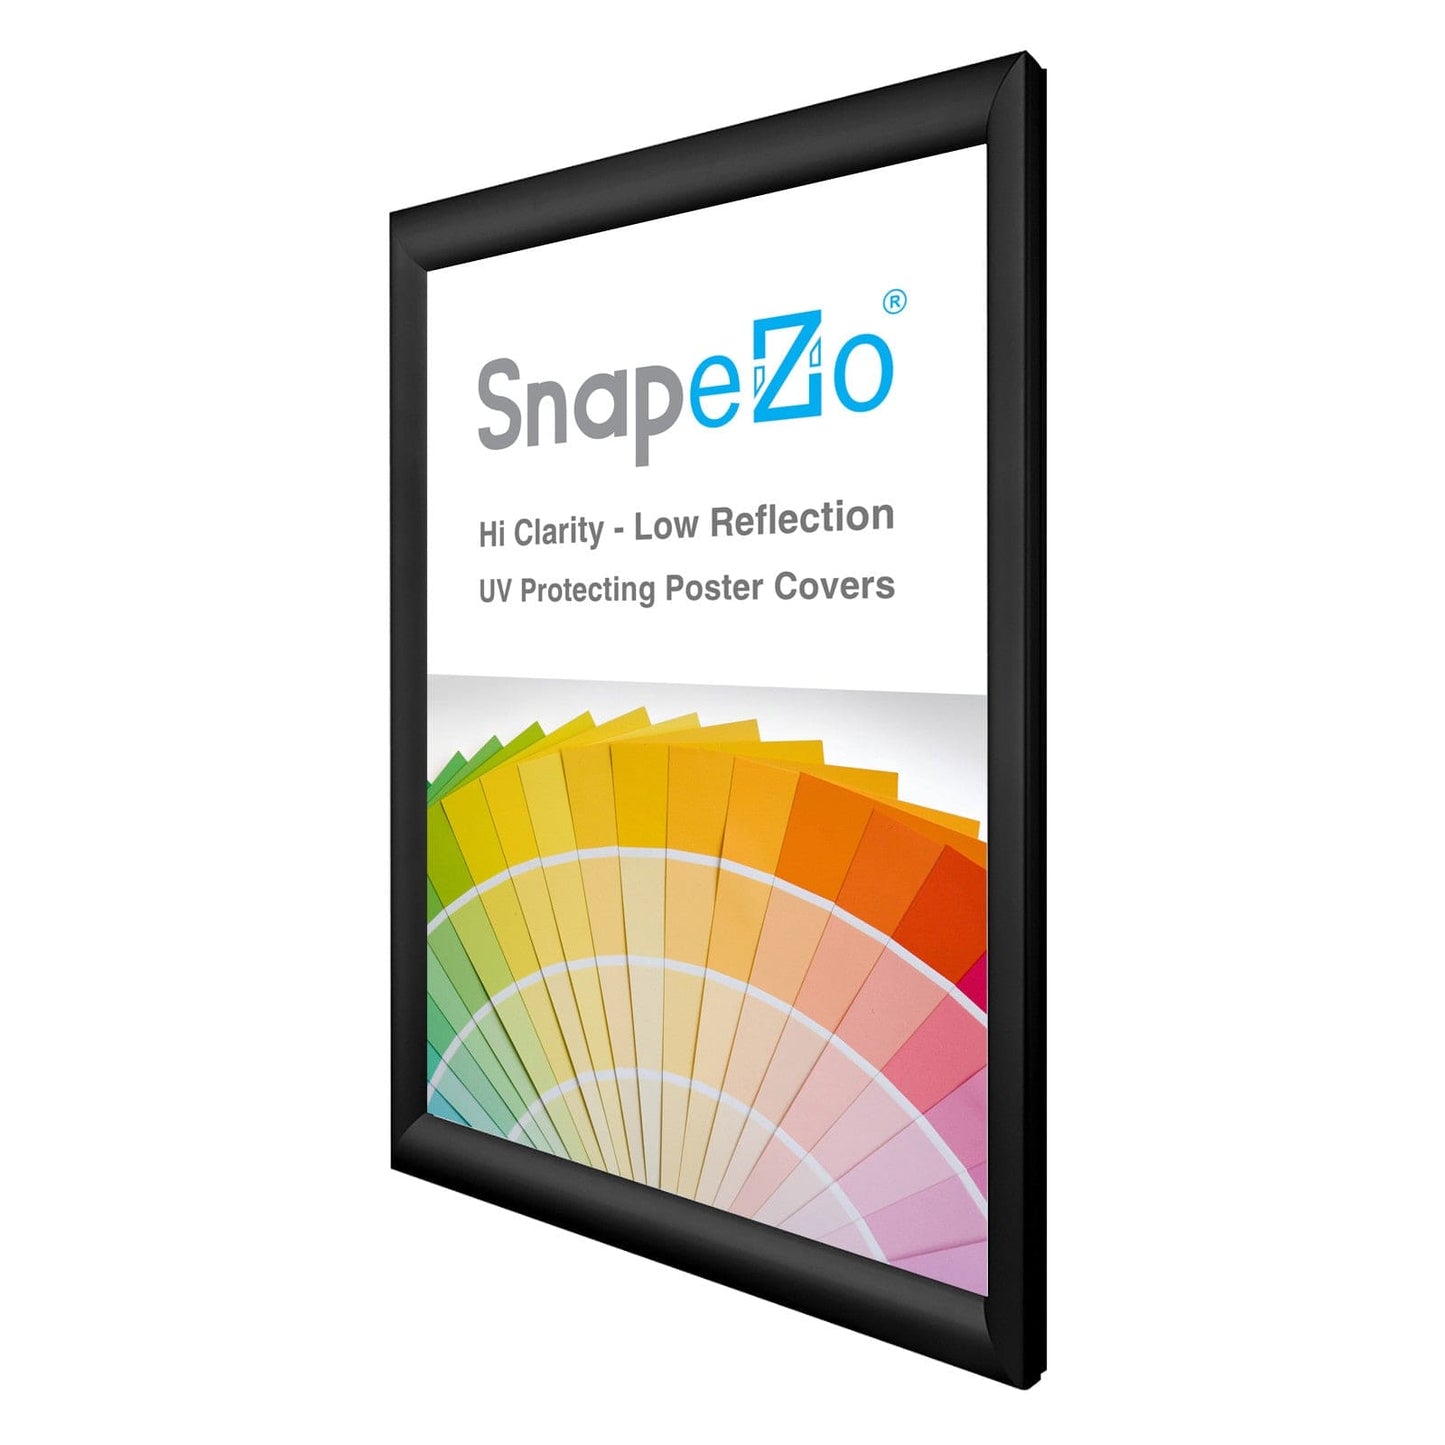 13x19 Black SnapeZo® Snap Frame - 1.2" Profile - Snap Frames Direct